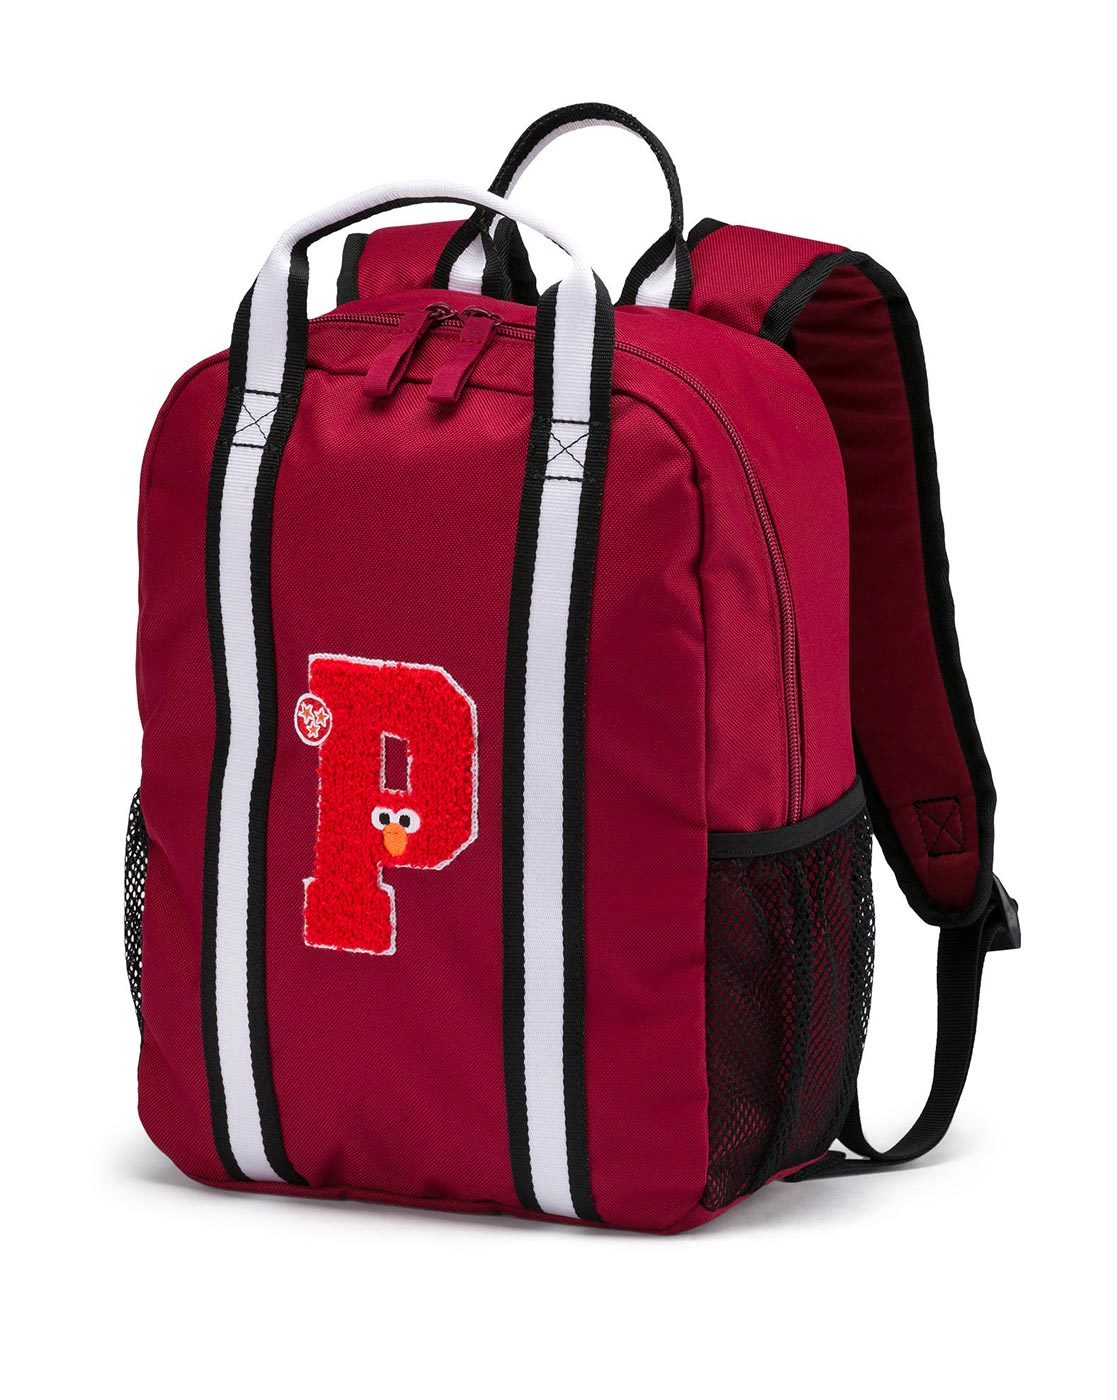 puma backpacks for boys